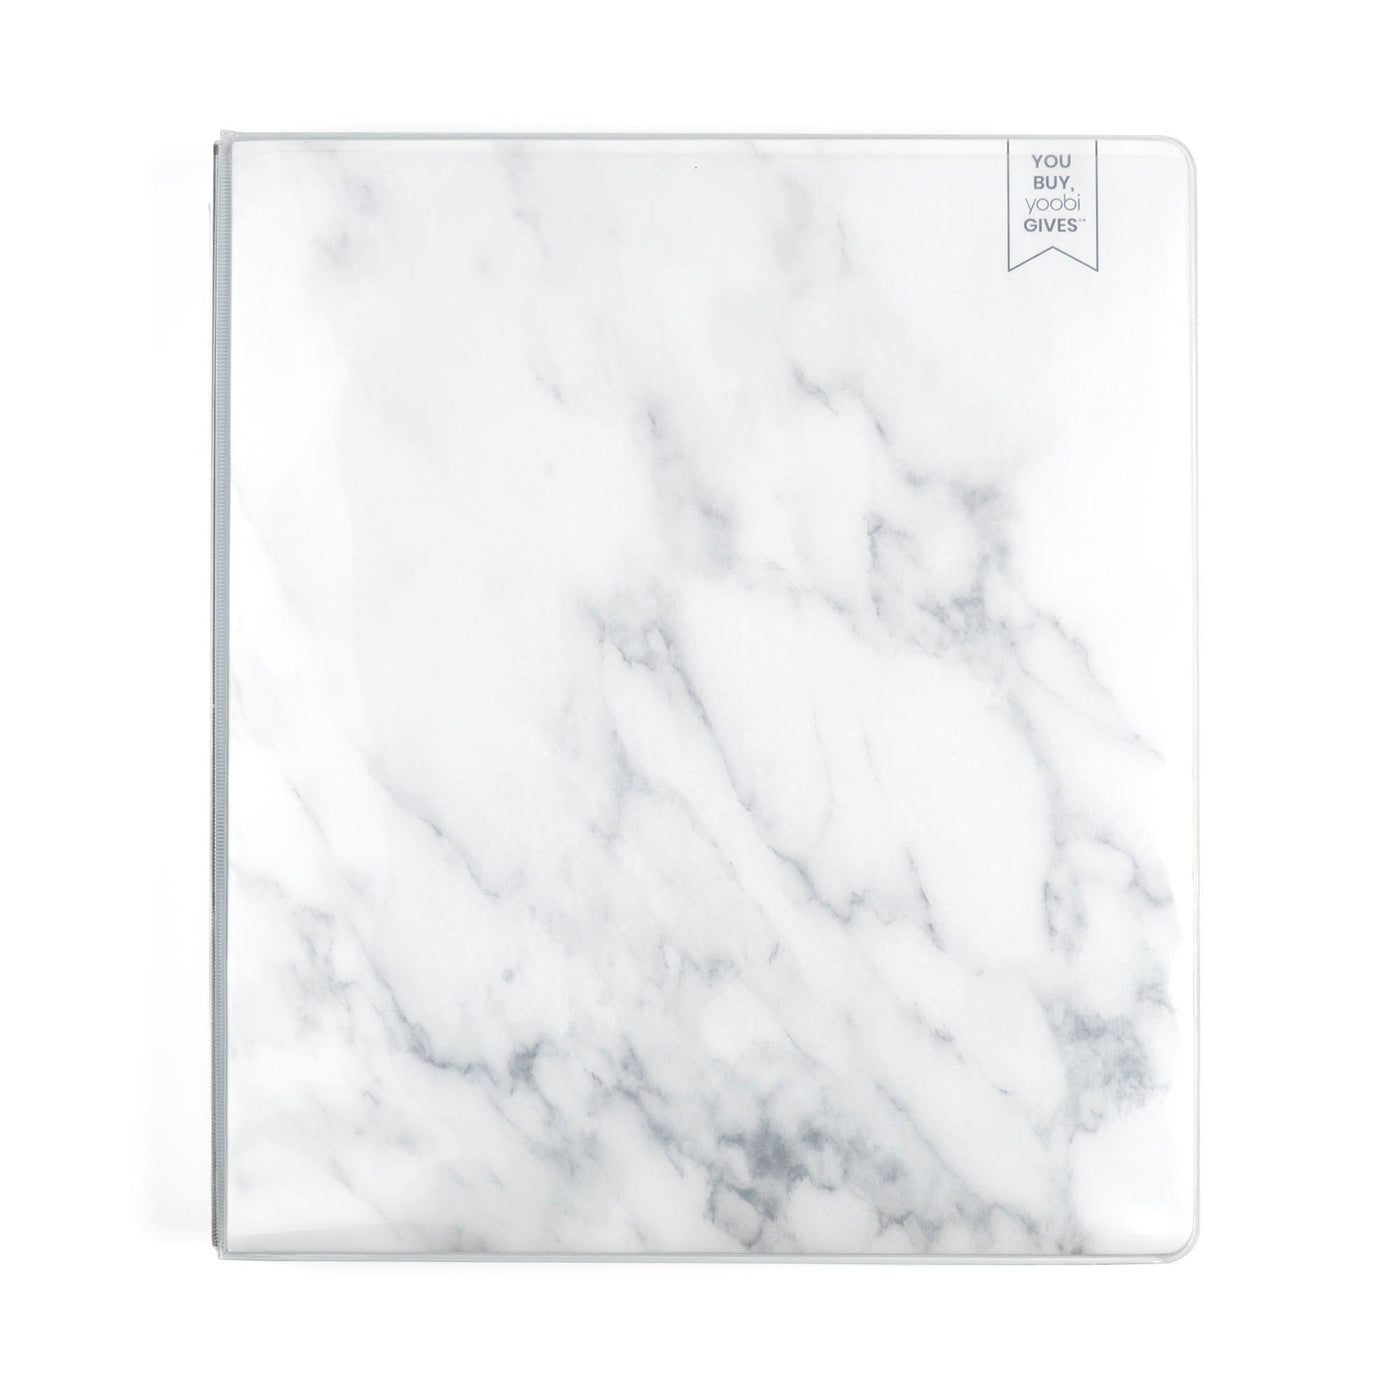 Yoobi 1 Inch Binder - Marble Design, Gray Color